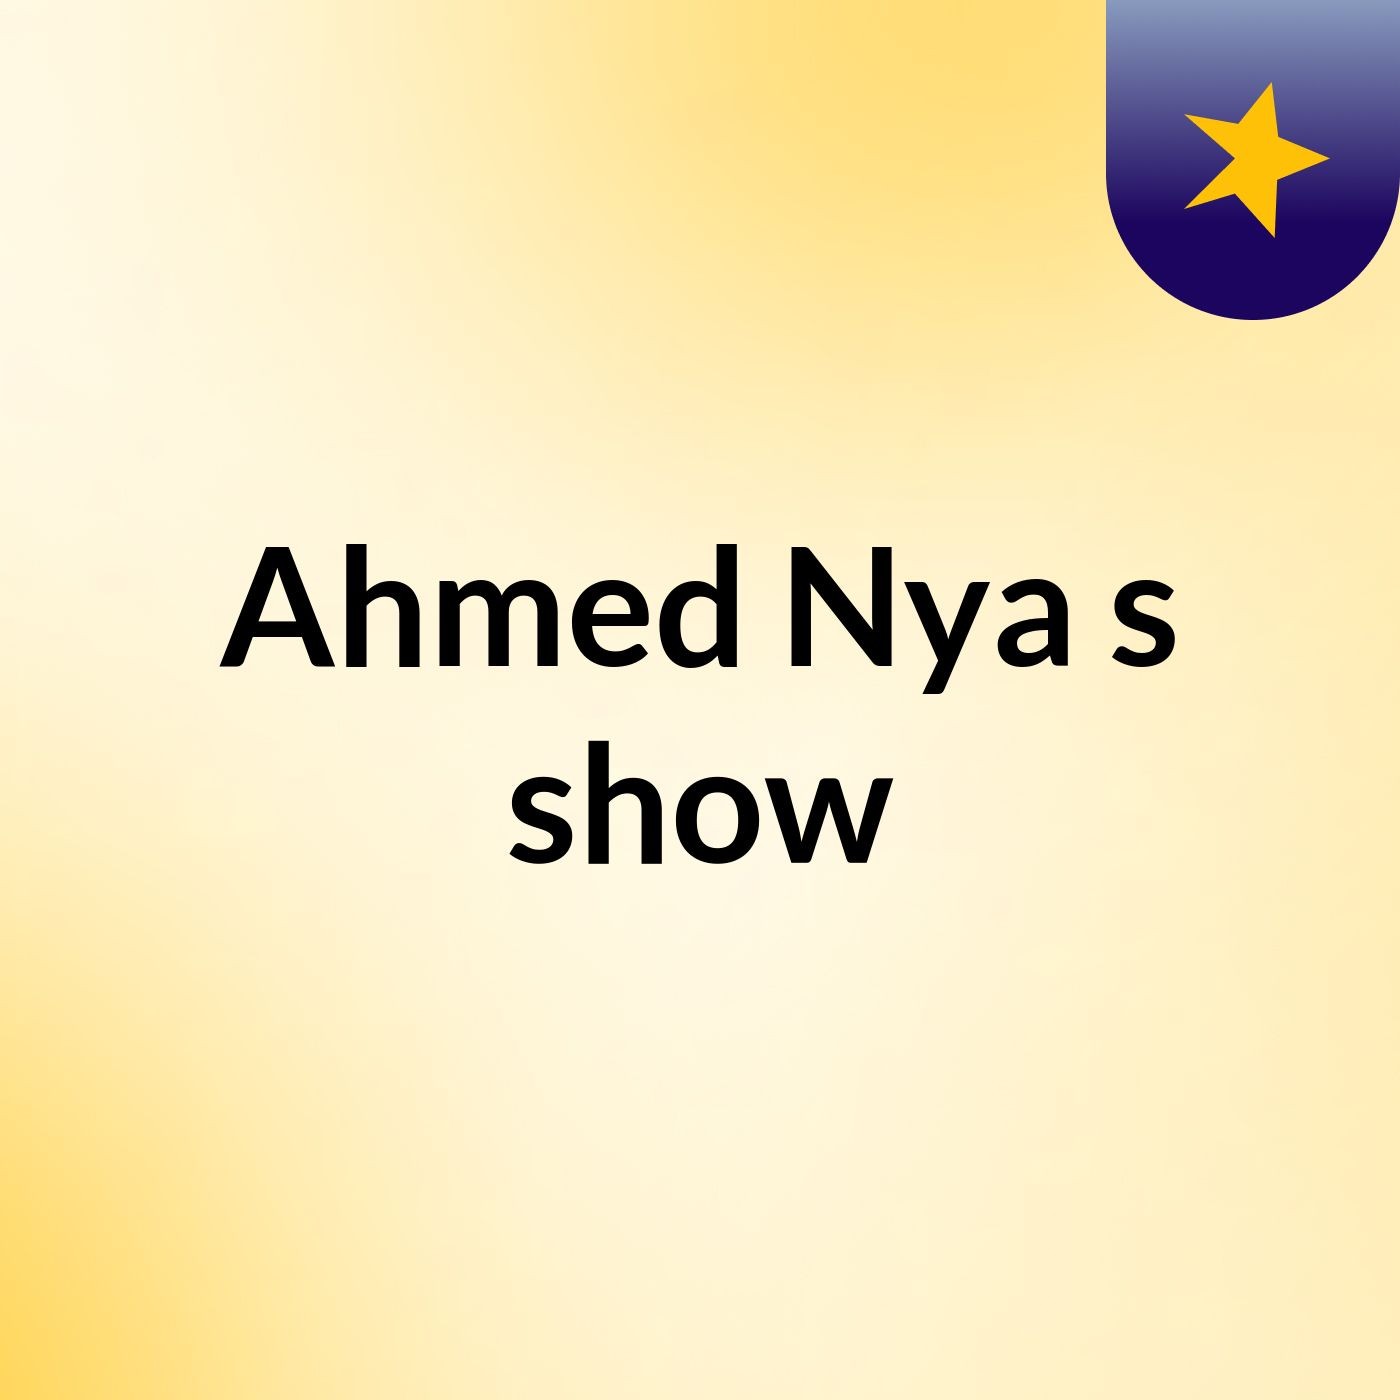 Ahmed Nya's show